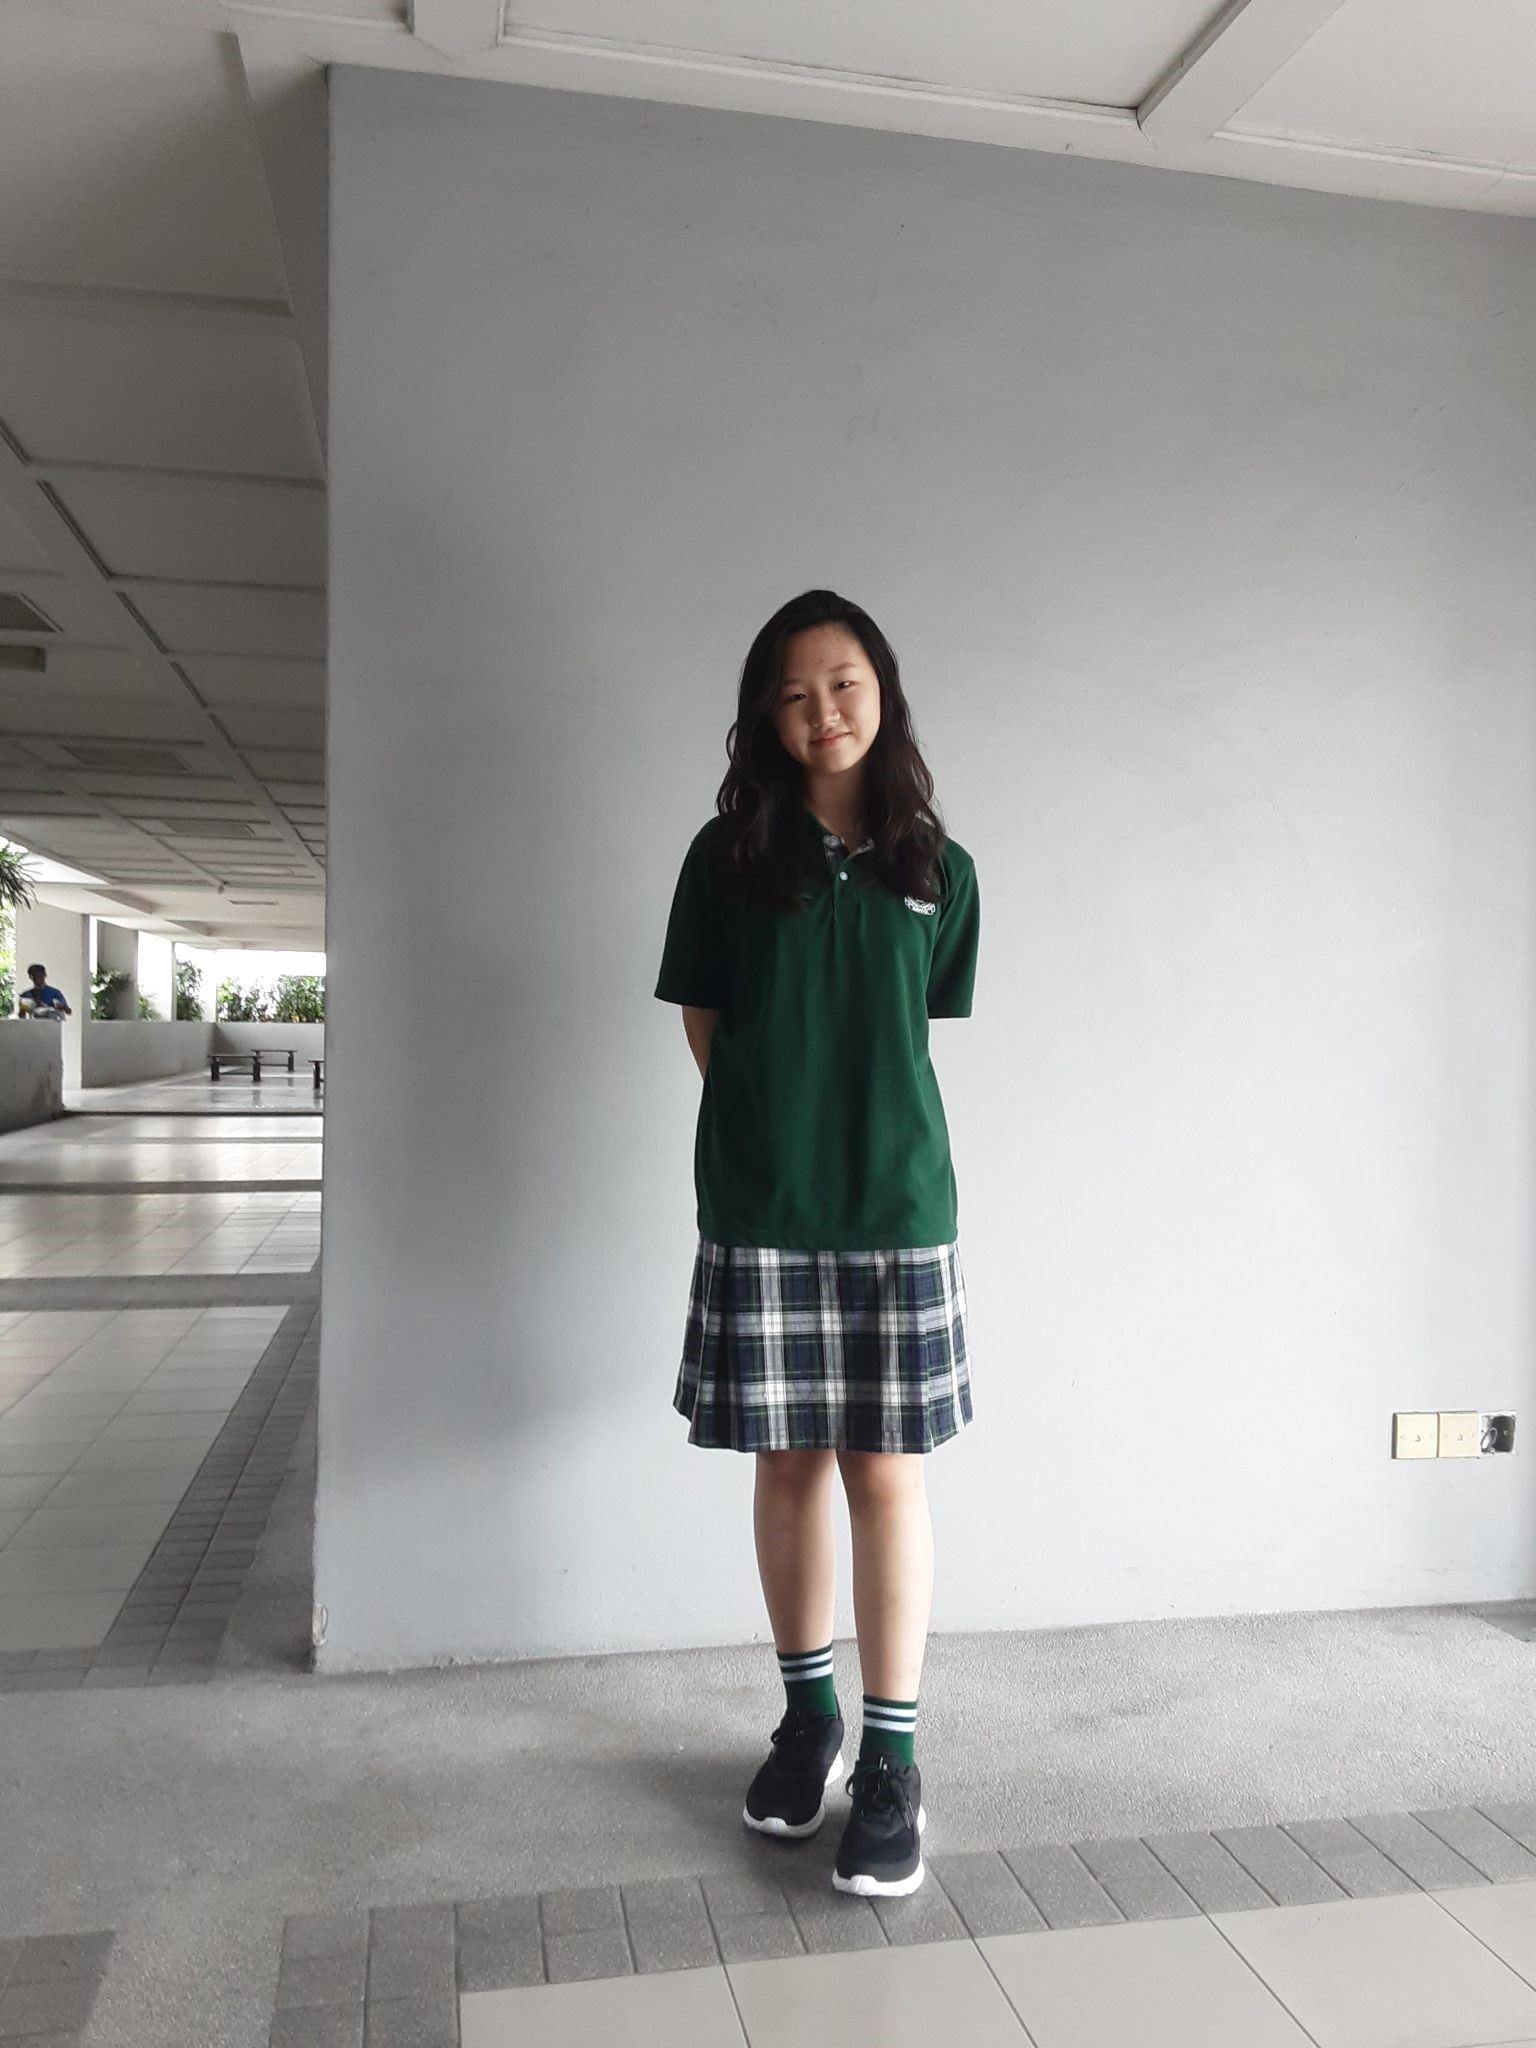 Amber improved her English skills at Sayfol International School Kuala Lumpur.